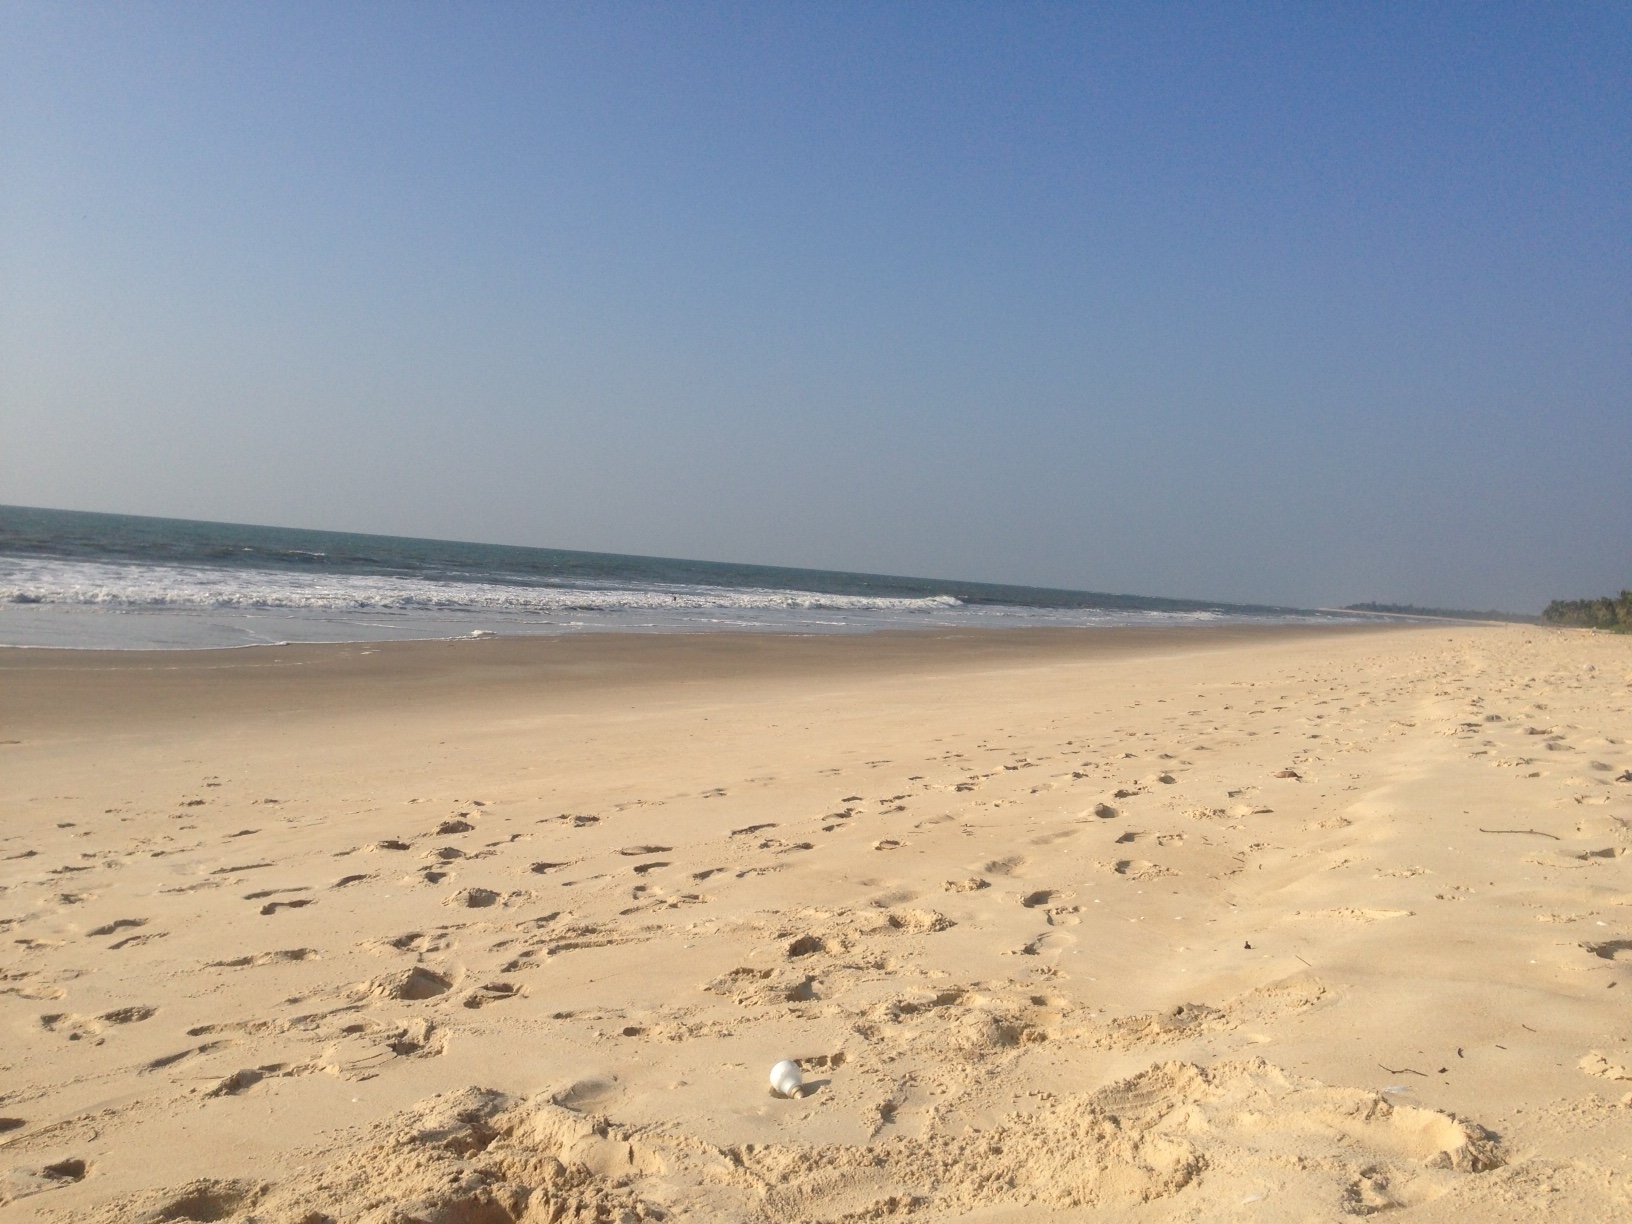 Kodi Bengre beach and the ocean